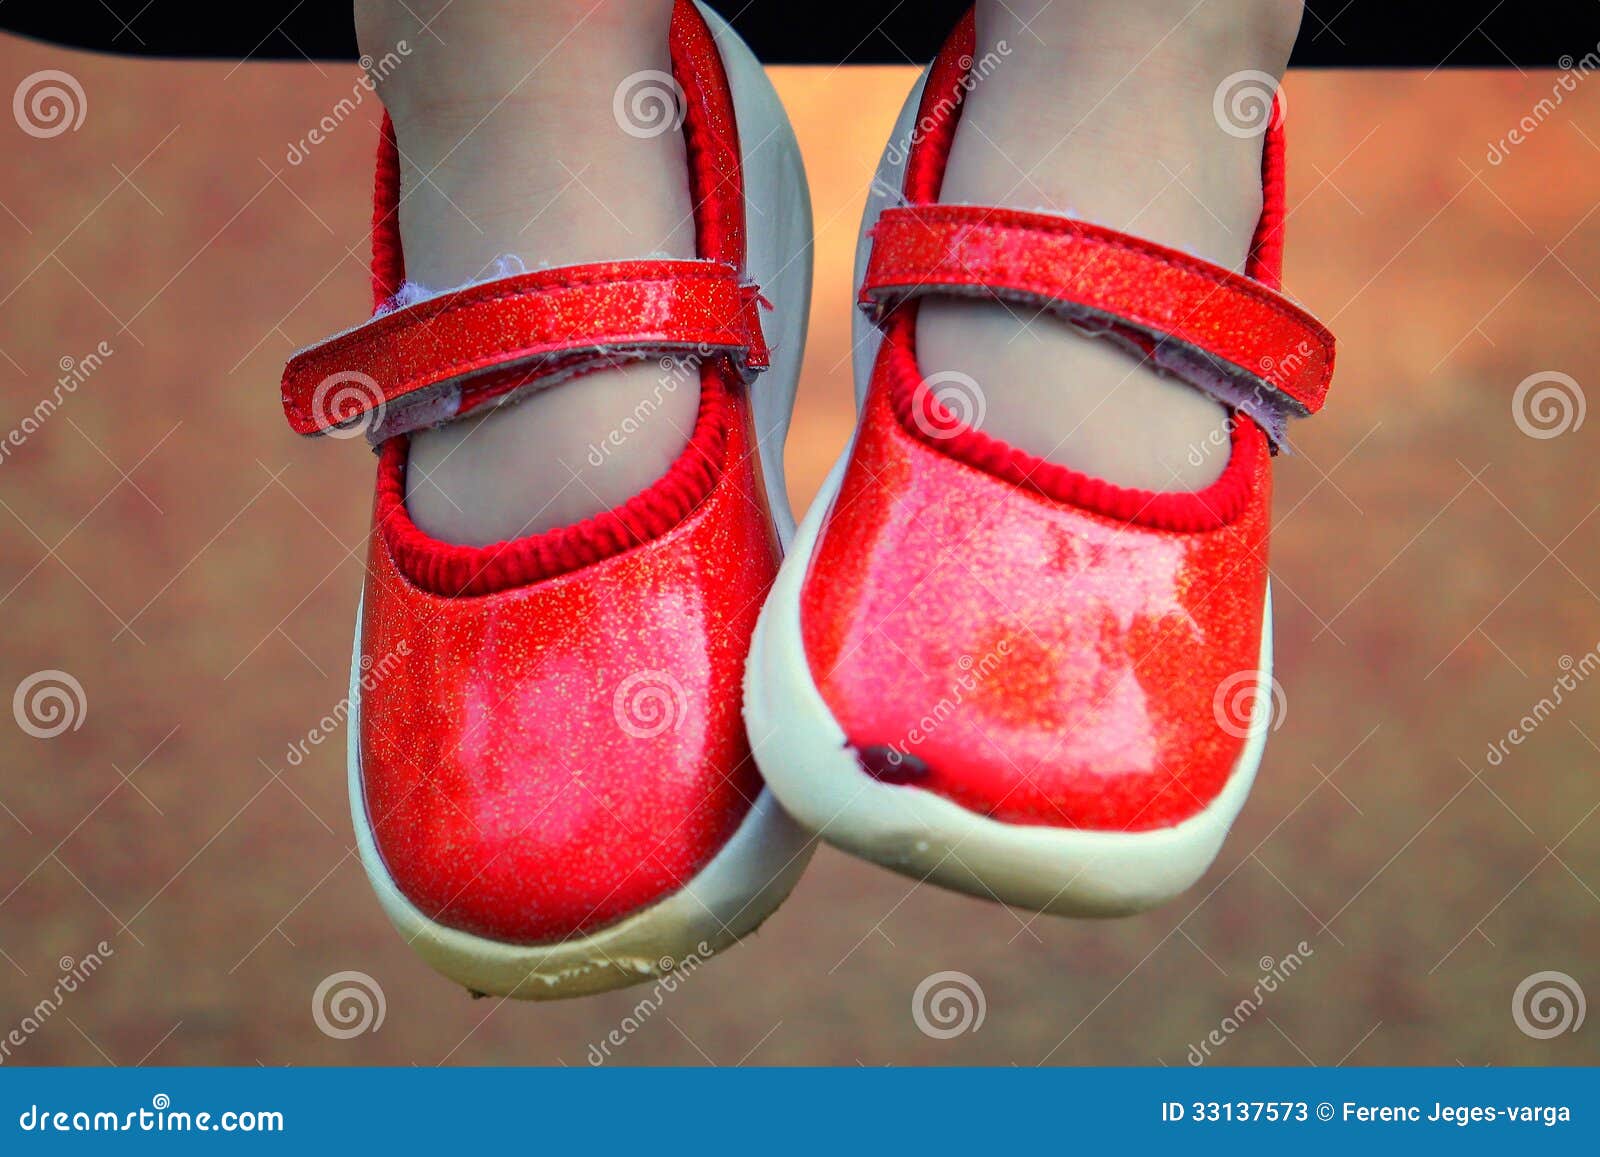 scarpe rosse bambina